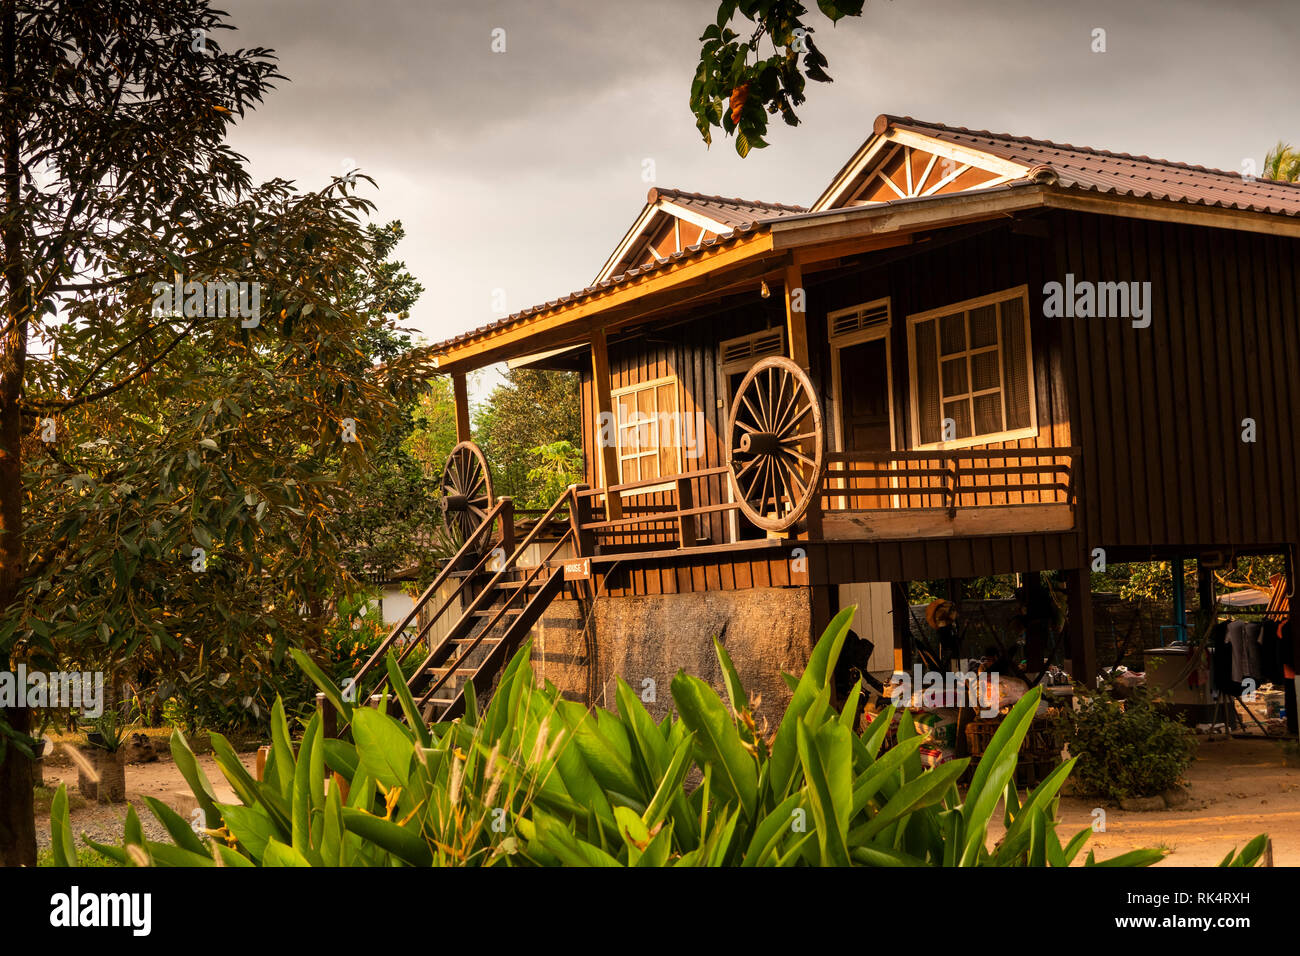 Kambodscha, Koh Kong Provinz, Chi Phat, Gemeinschaft Tourismus Projekt, Sun Bear Bungalows, alte Wagenräder dekorieren Bauernhaus Balkon Stockfoto